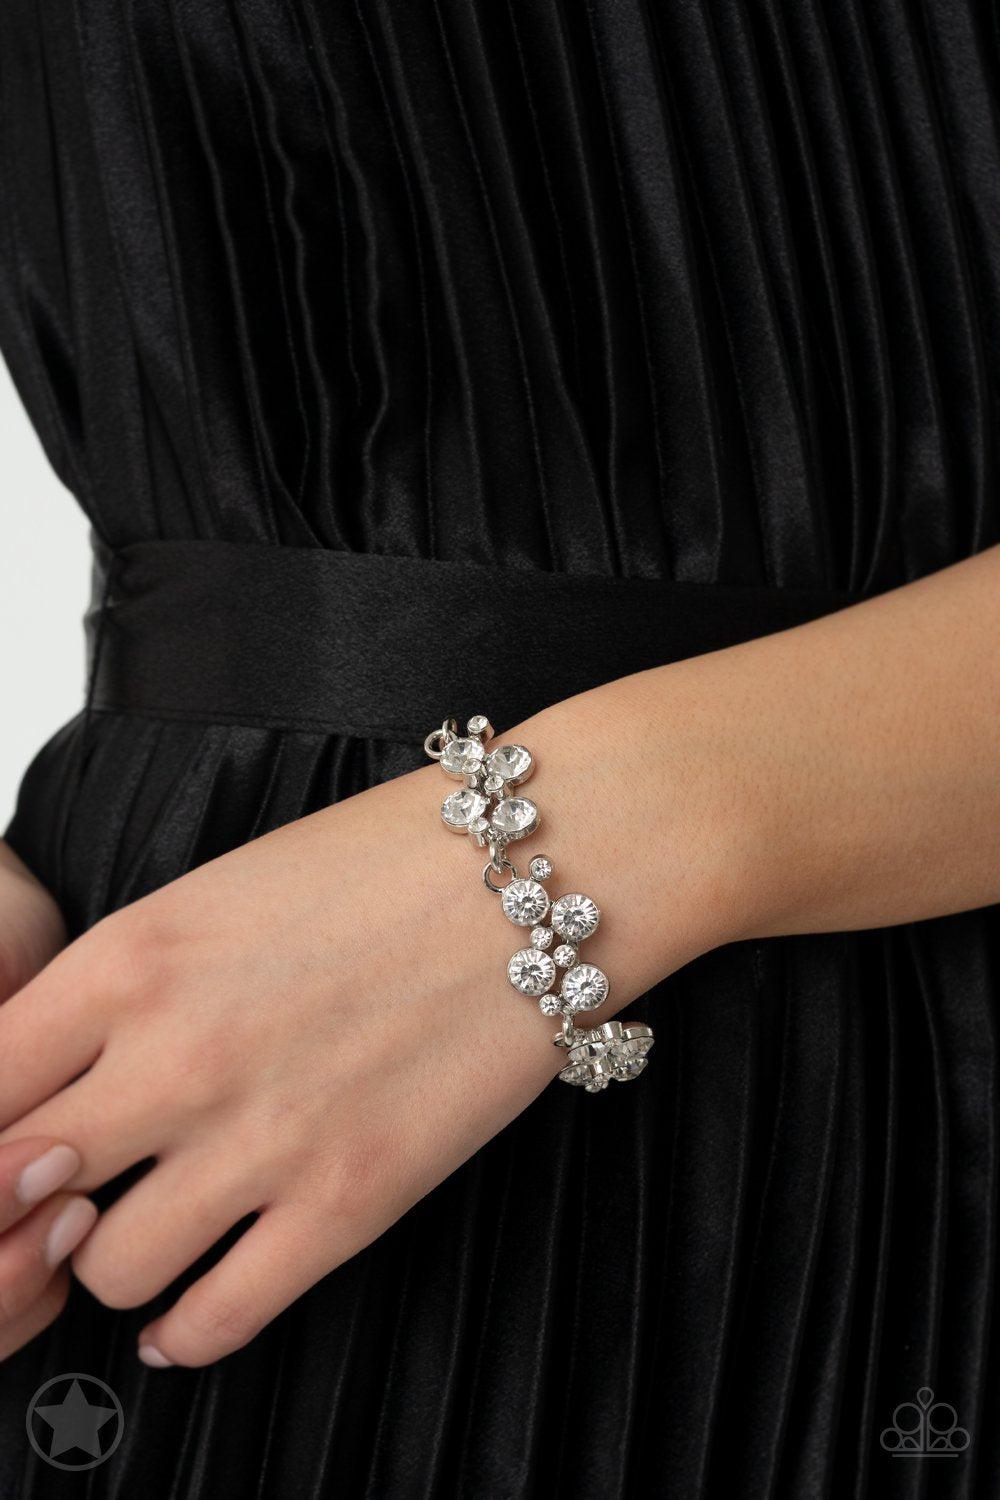 Old Hollywood White Rhinestone Bracelet - Paparazzi Accessories - lightbox -CarasShop.com - $5 Jewelry by Cara Jewels